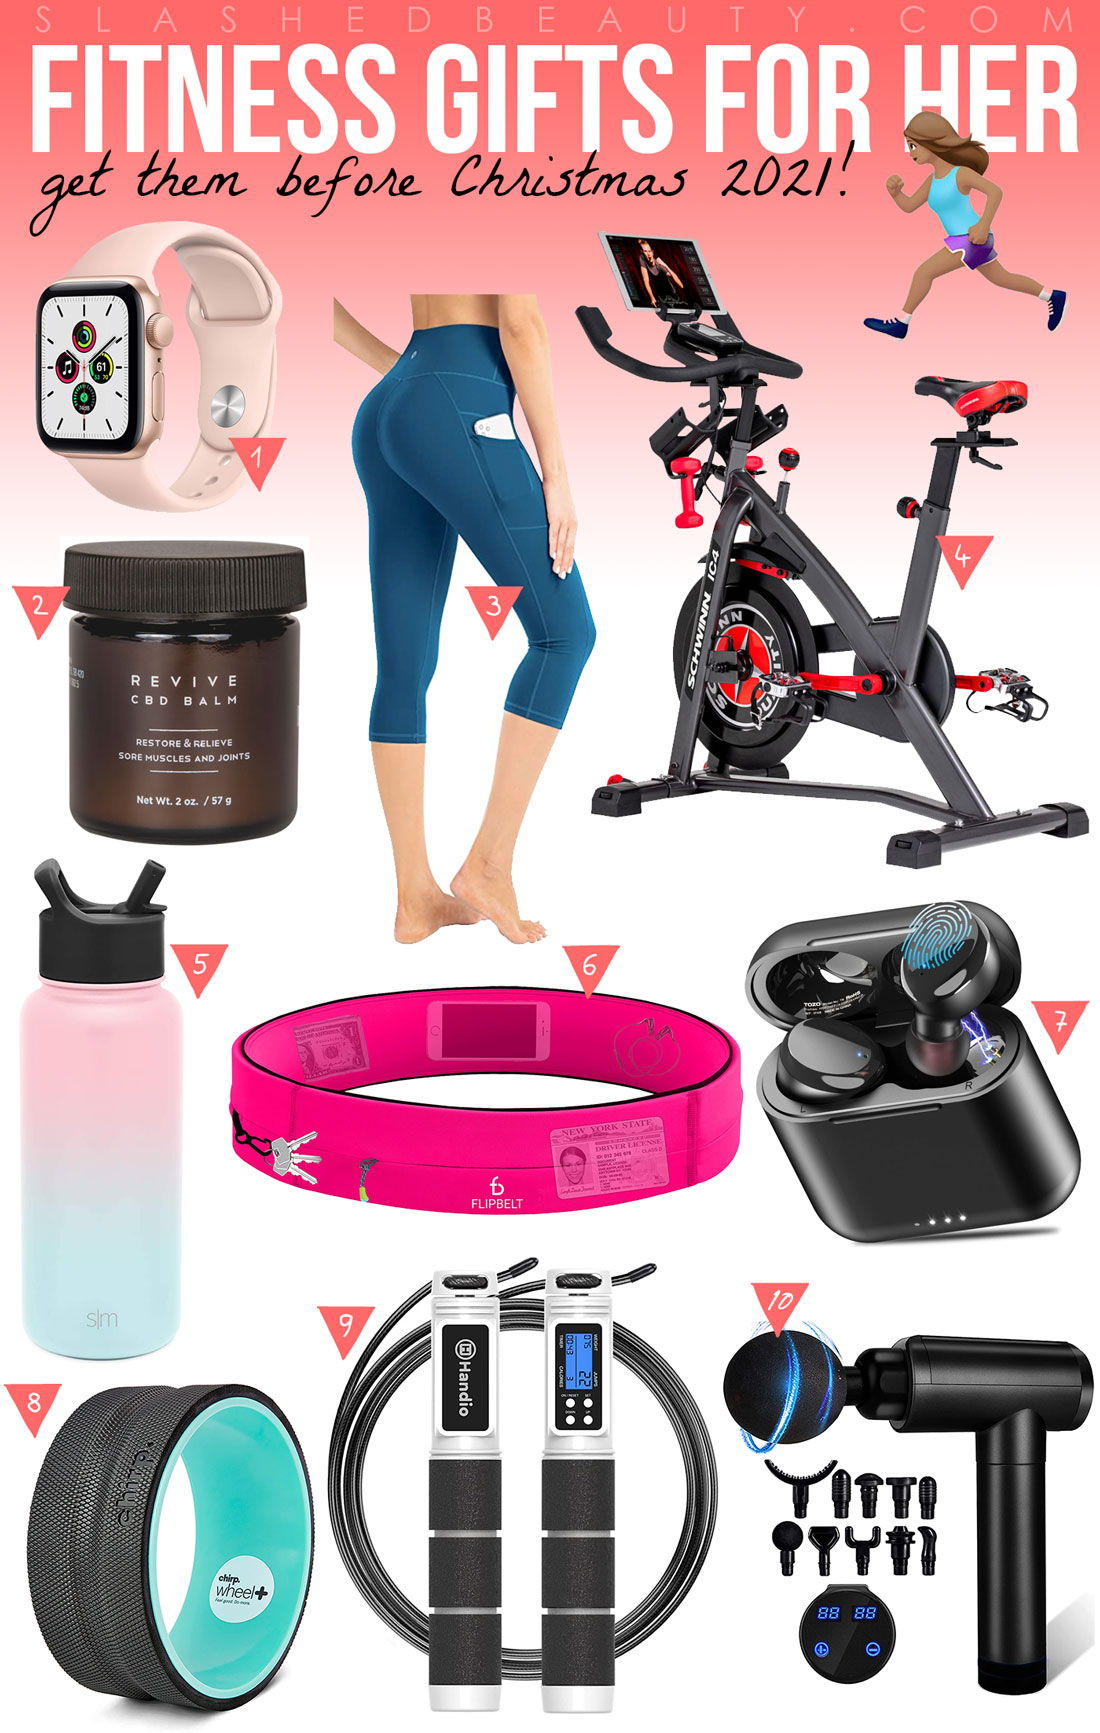 https://slashedbeauty.com/wp-content/uploads/2021/11/workout-gifts-fitness-gift-guide.jpg